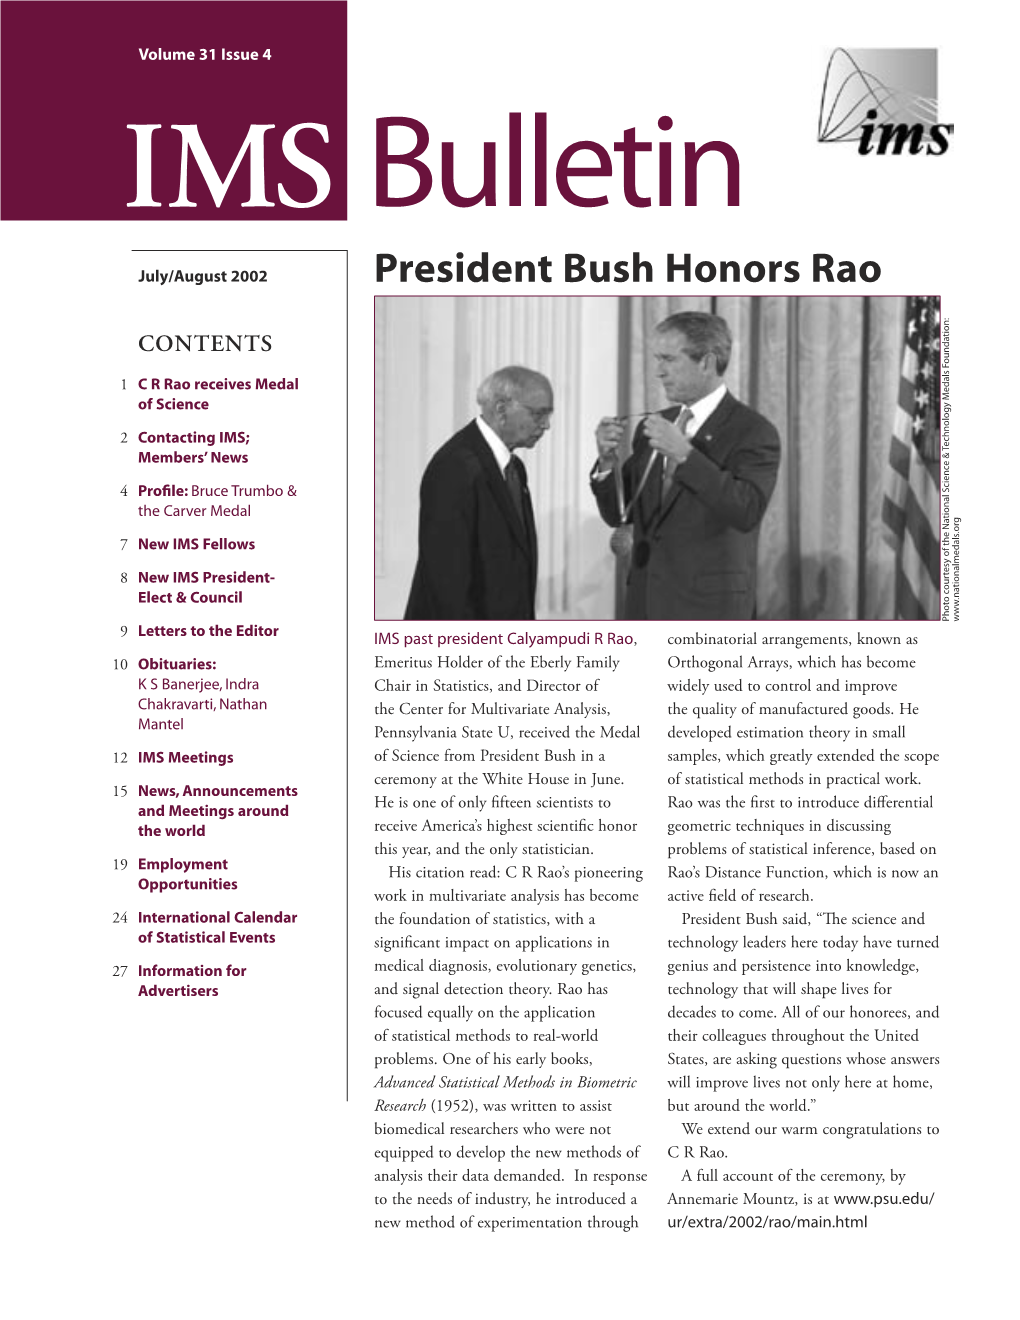 IMS Bulletin 31(4)